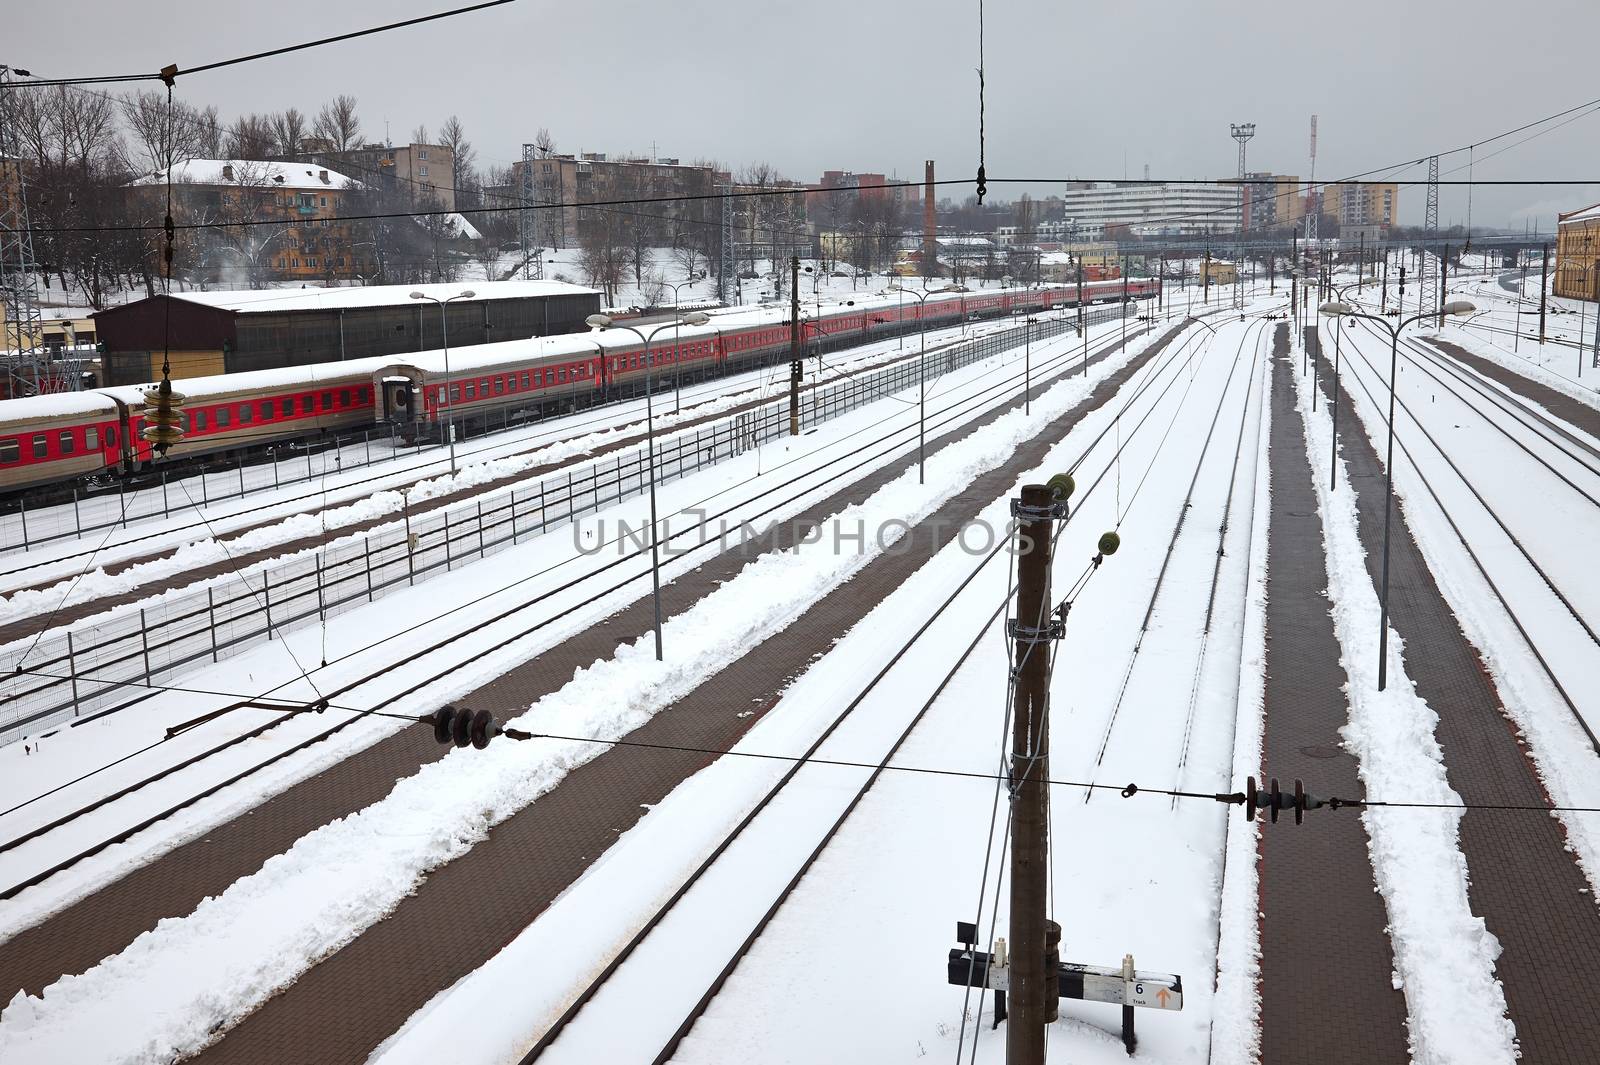 Railroad station tracks in winter